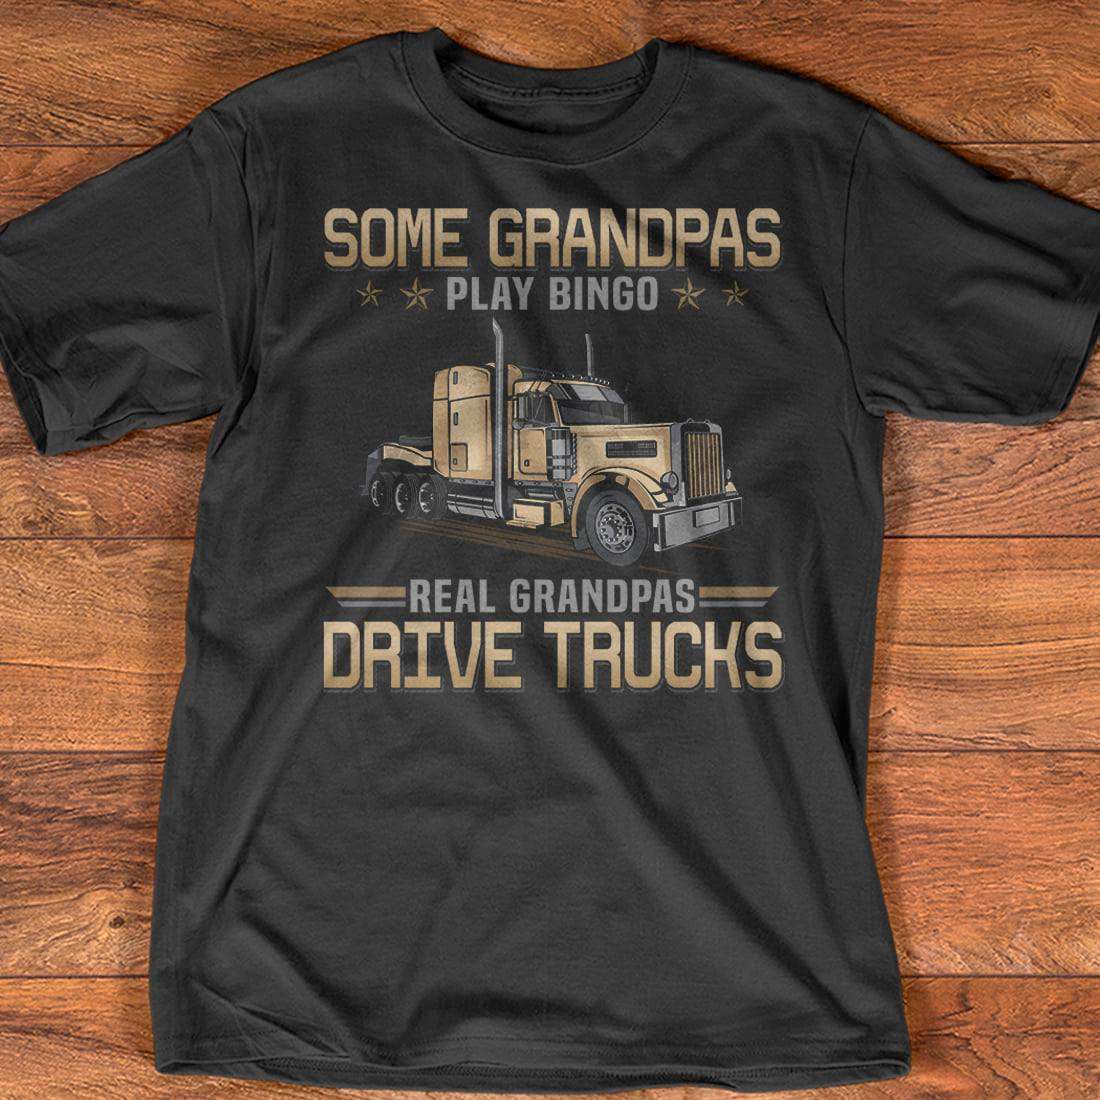 Some grandpas play bingo real grandpas drive trucks - Grandpa trucker